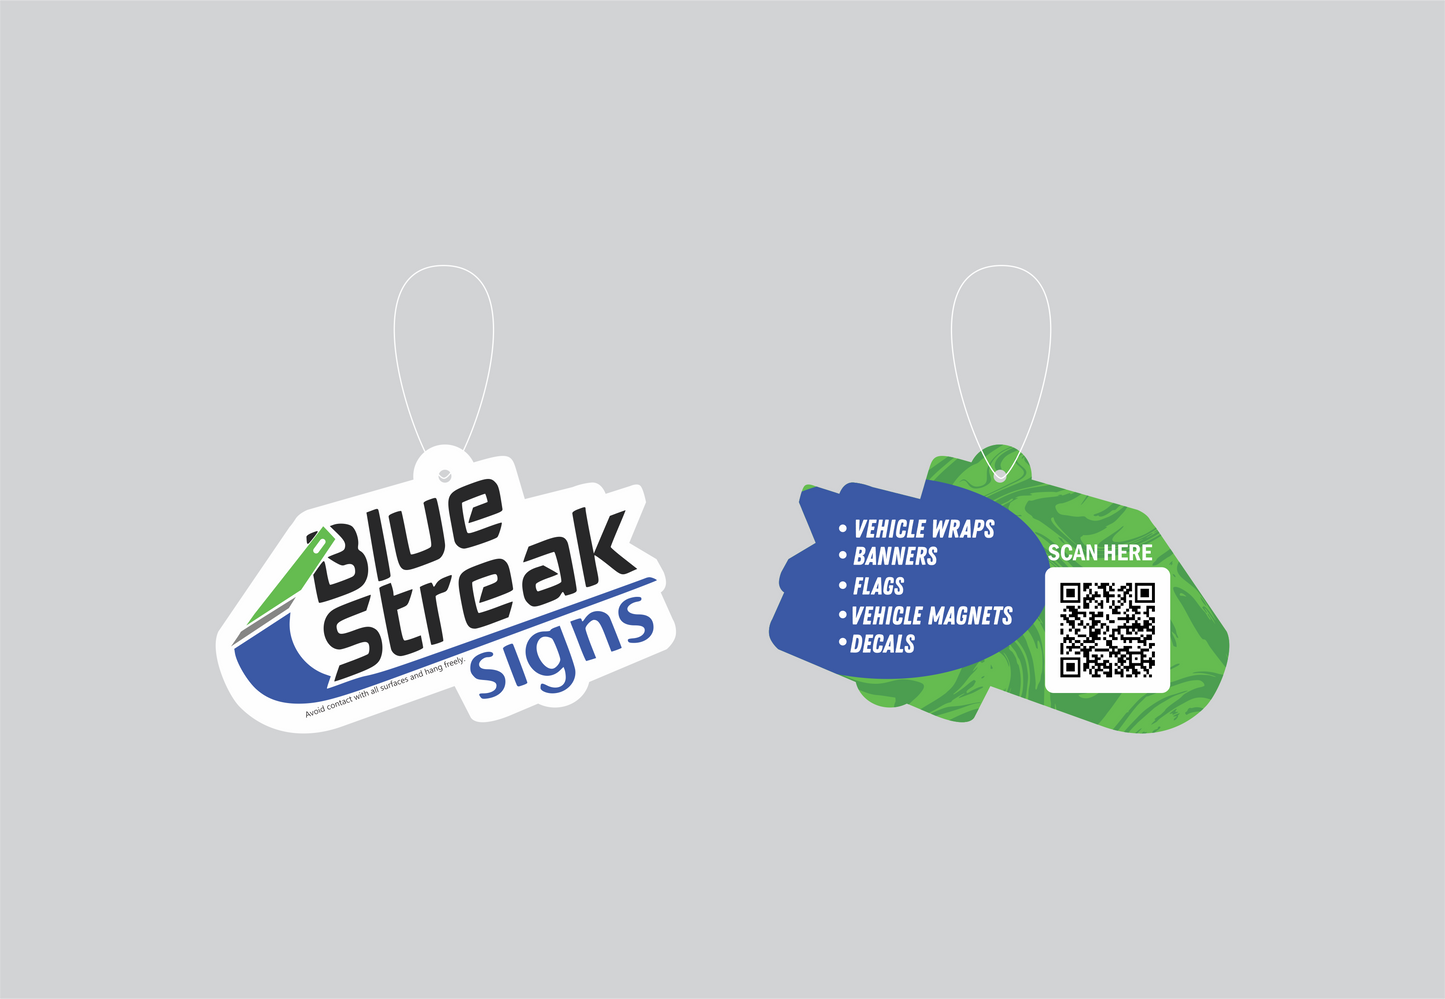 Blue Streak Signs